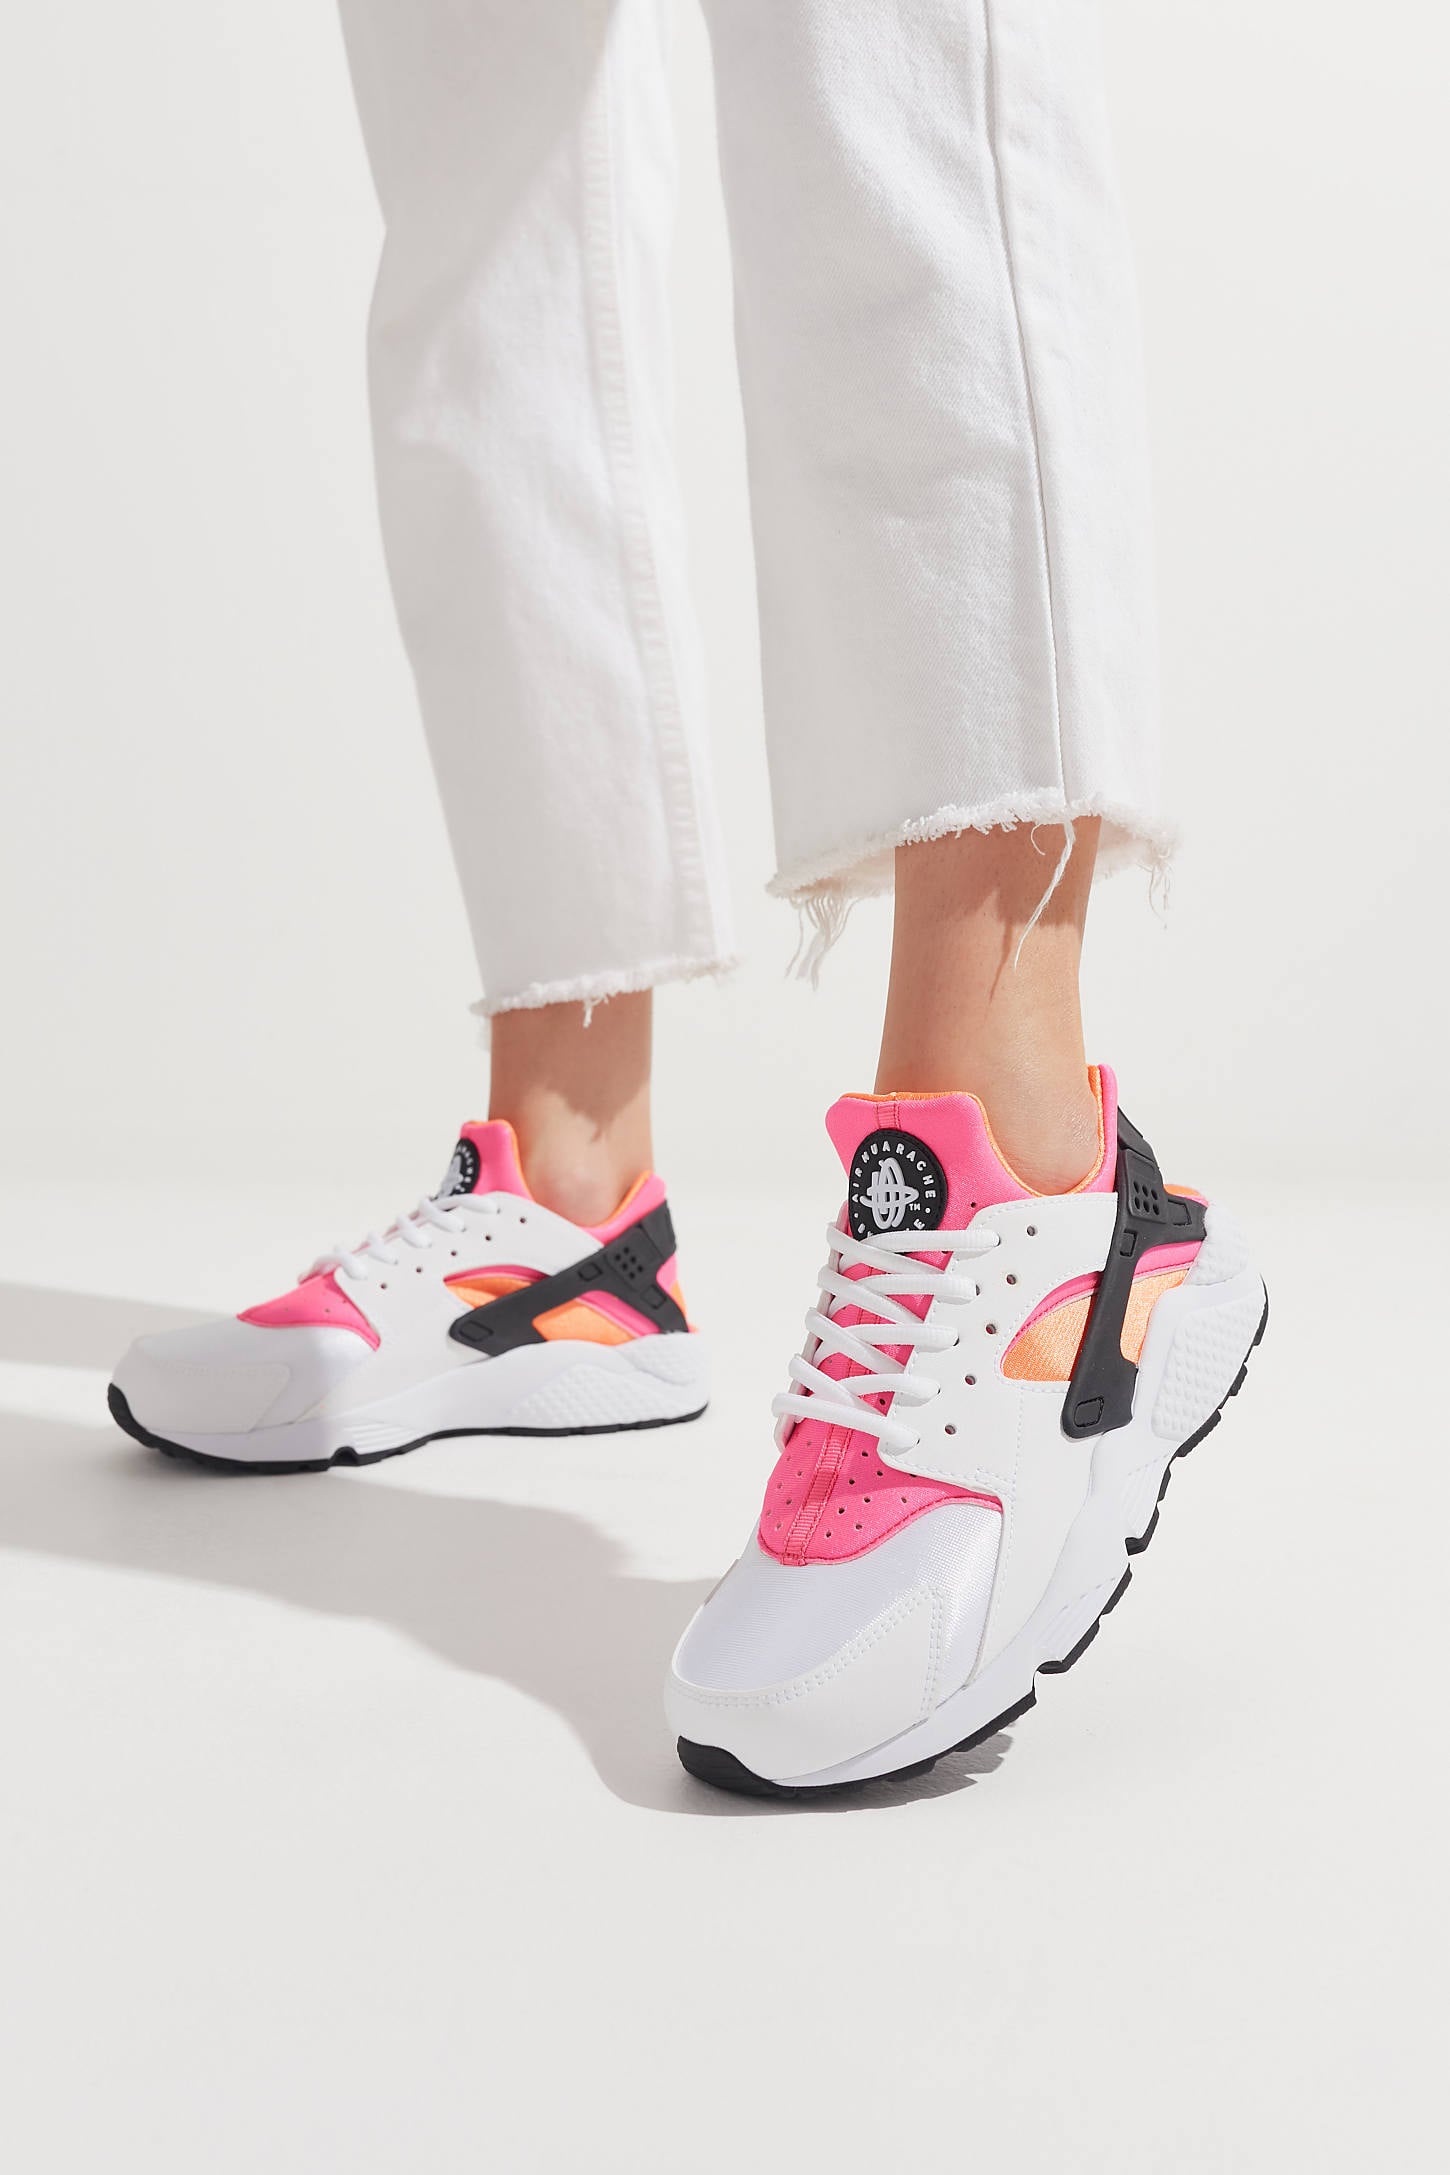 Cute Nike for Women 2019 | POPSUGAR